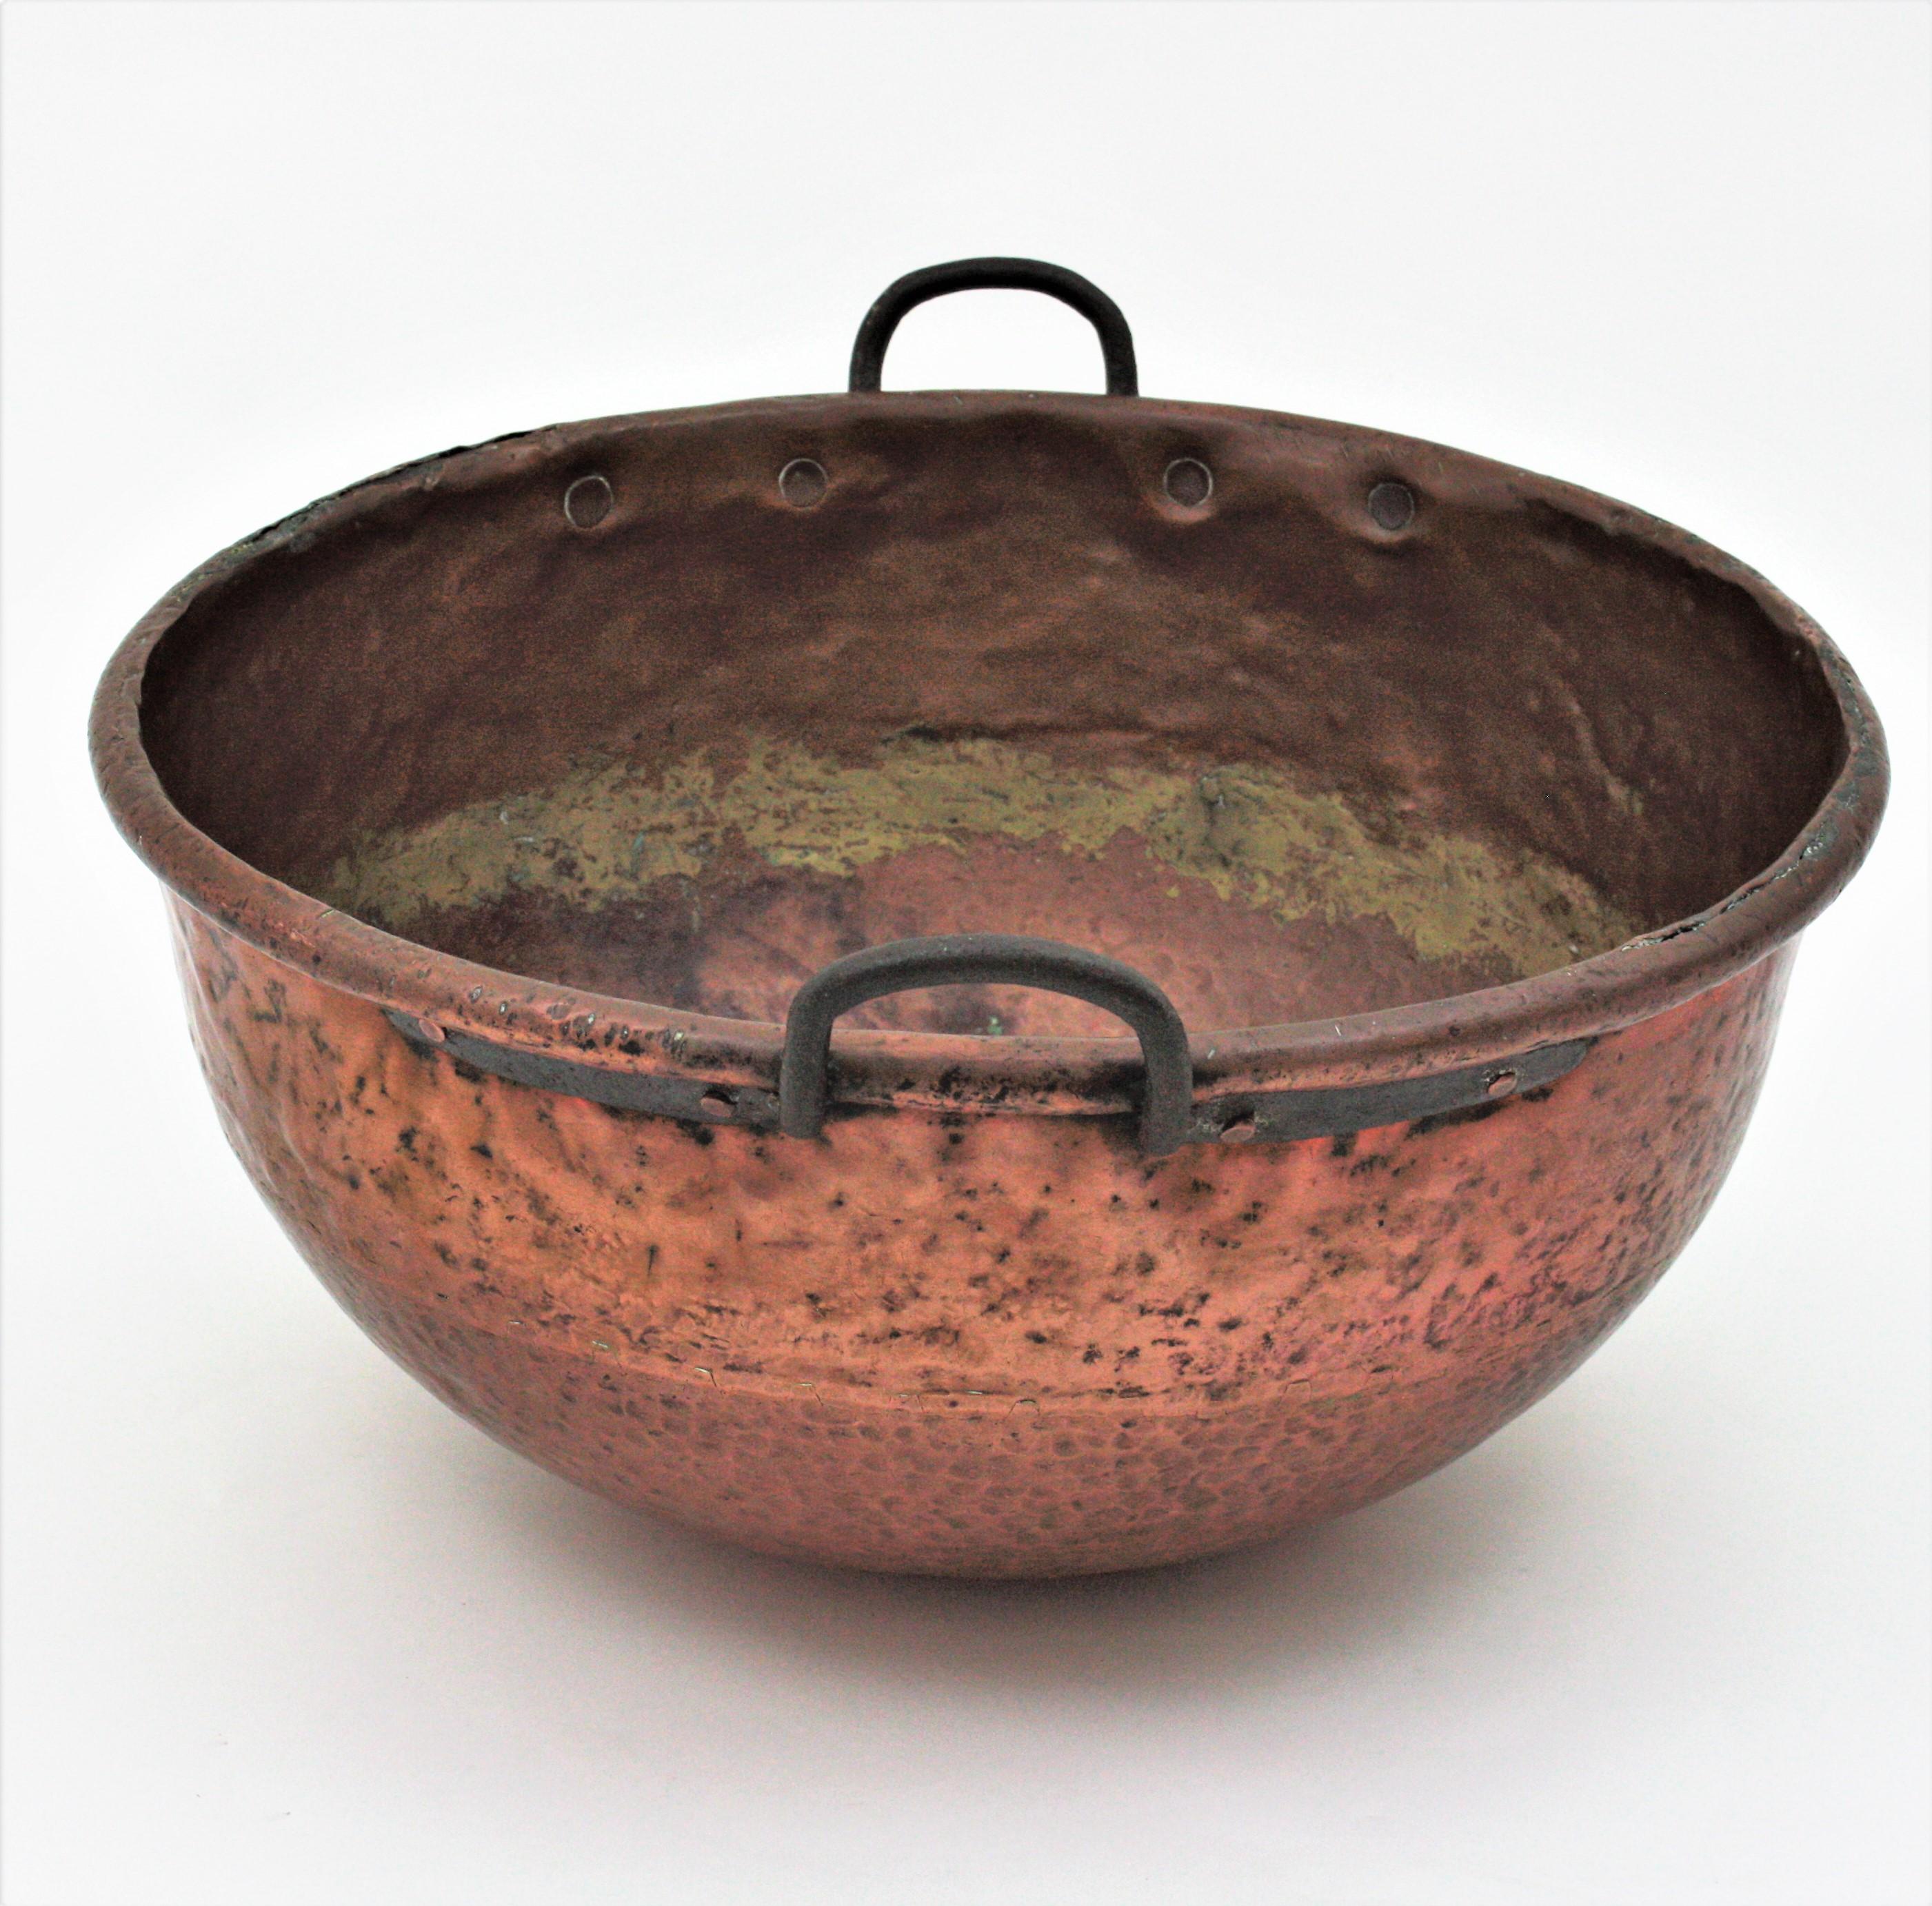 20th Century Massive French Copper Cauldron Pot with Iron Handles